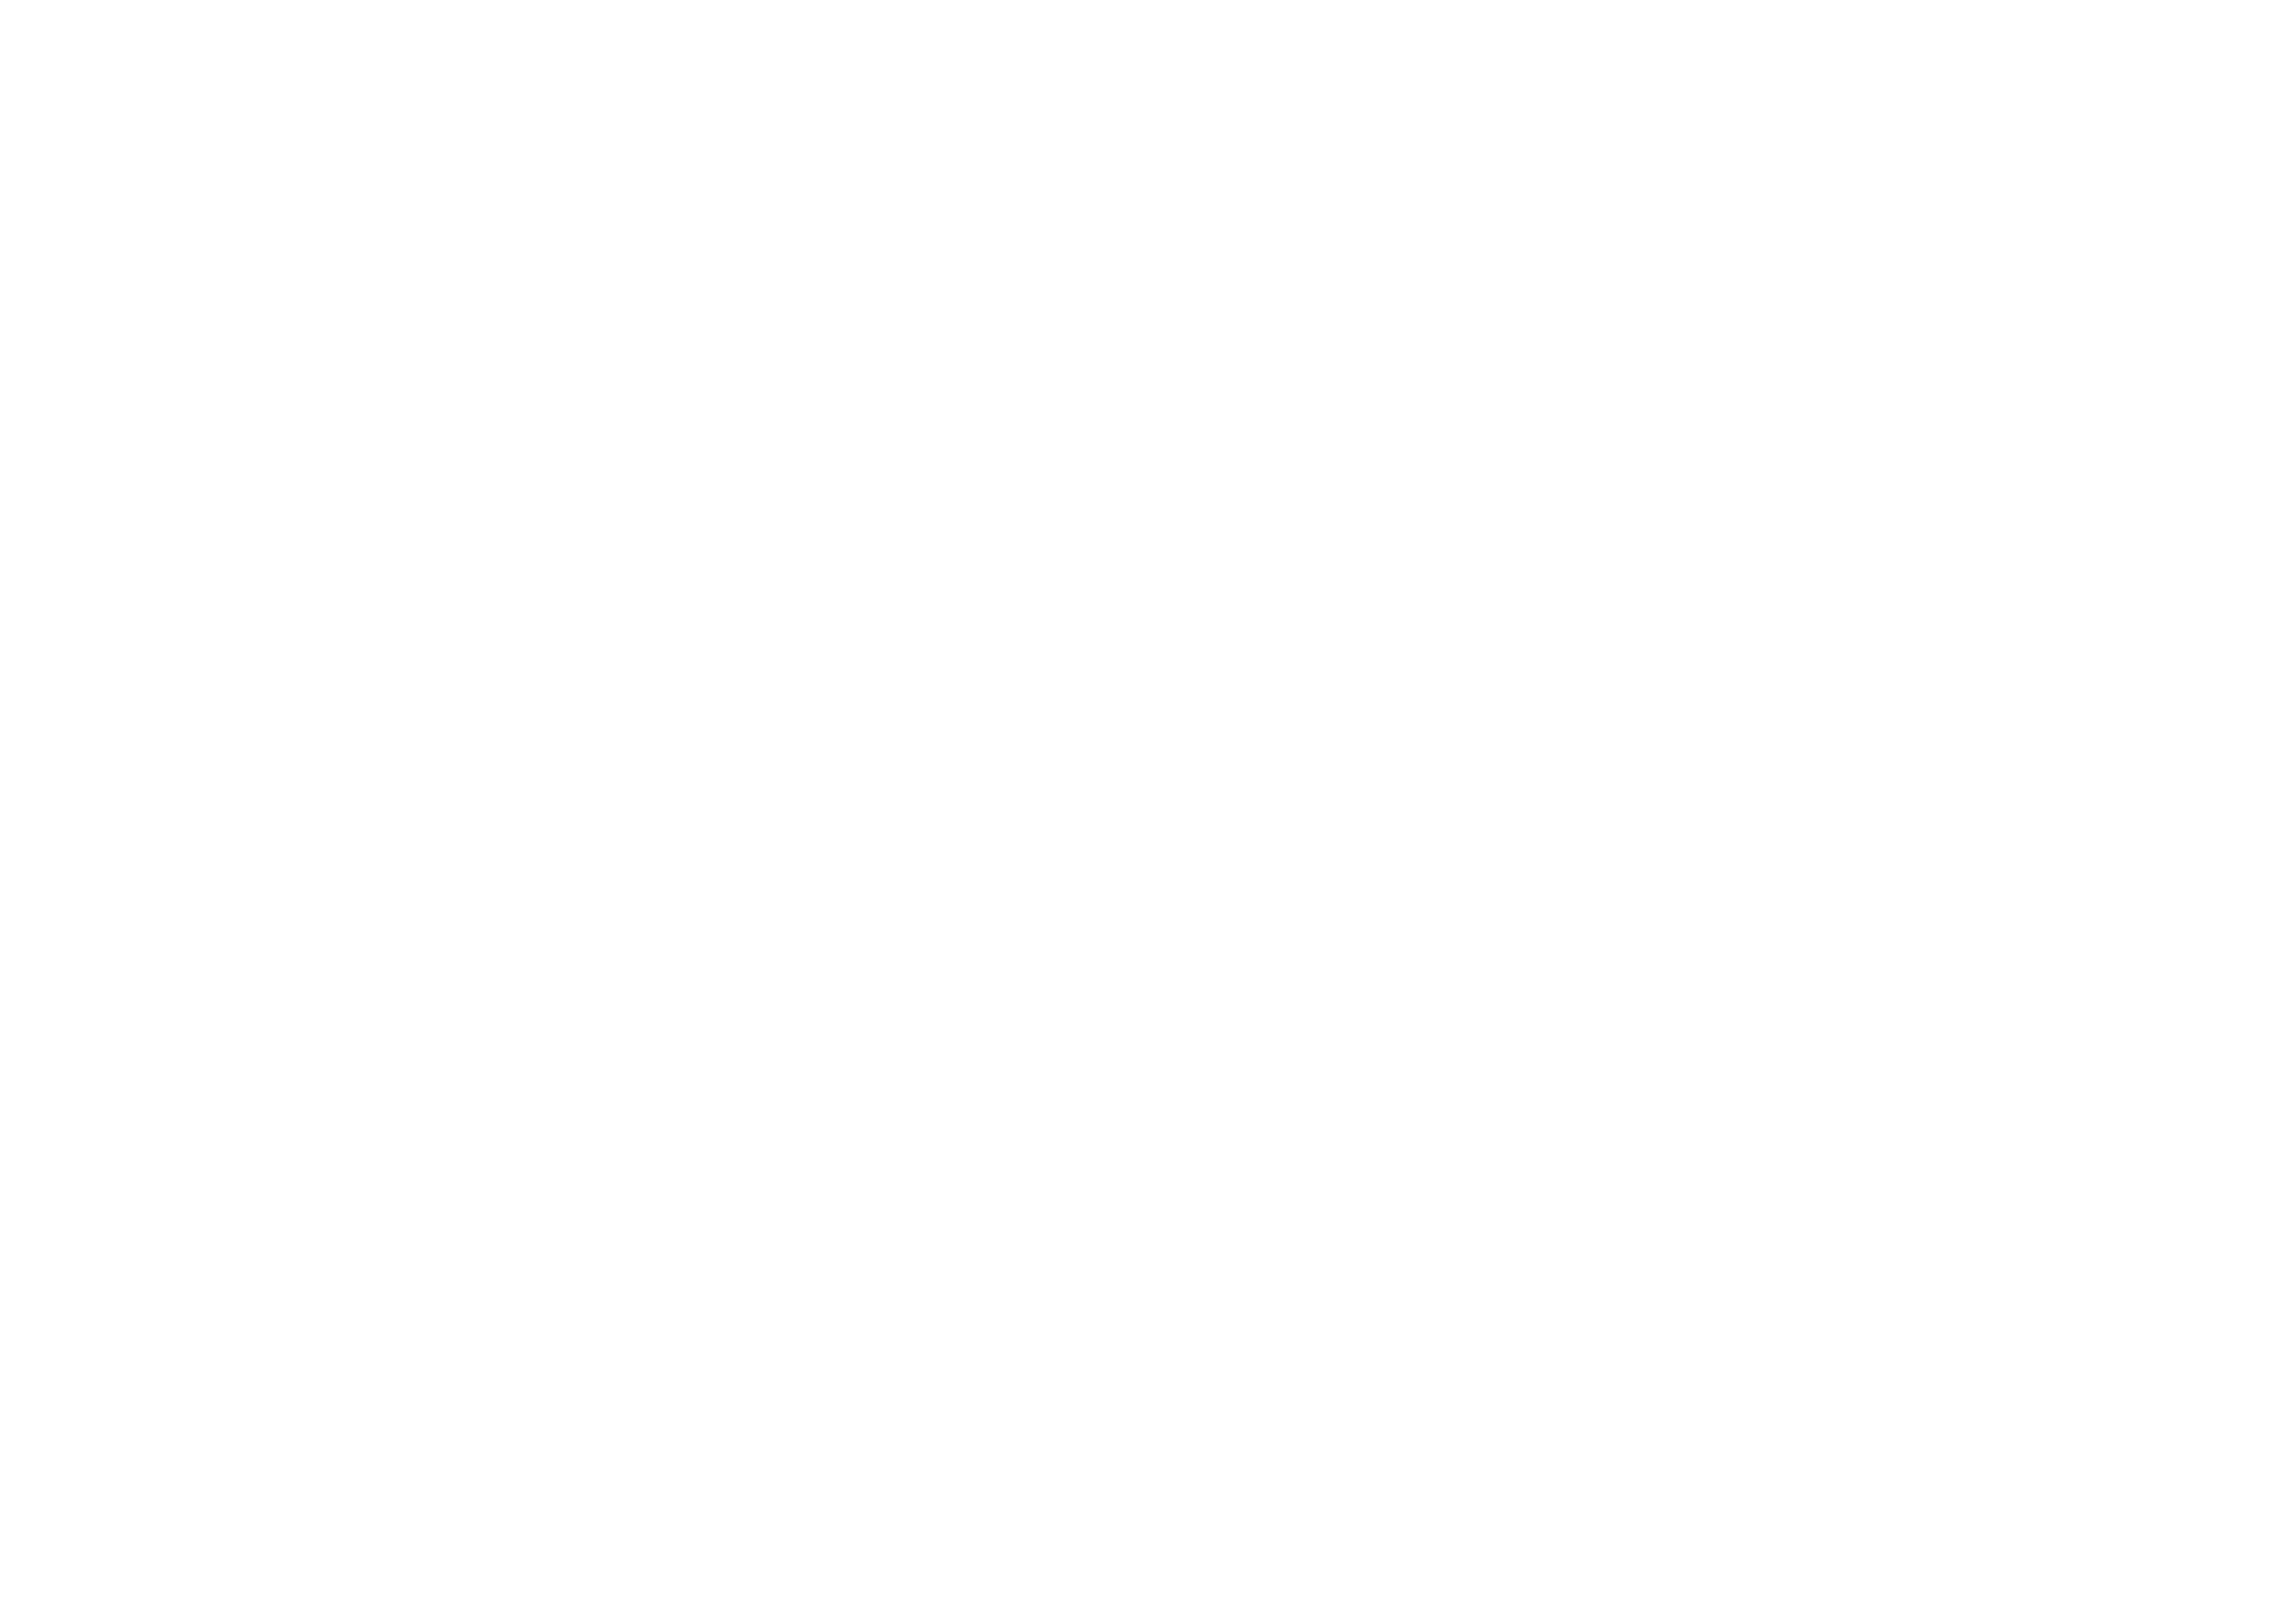 Ross Thompson Furniture